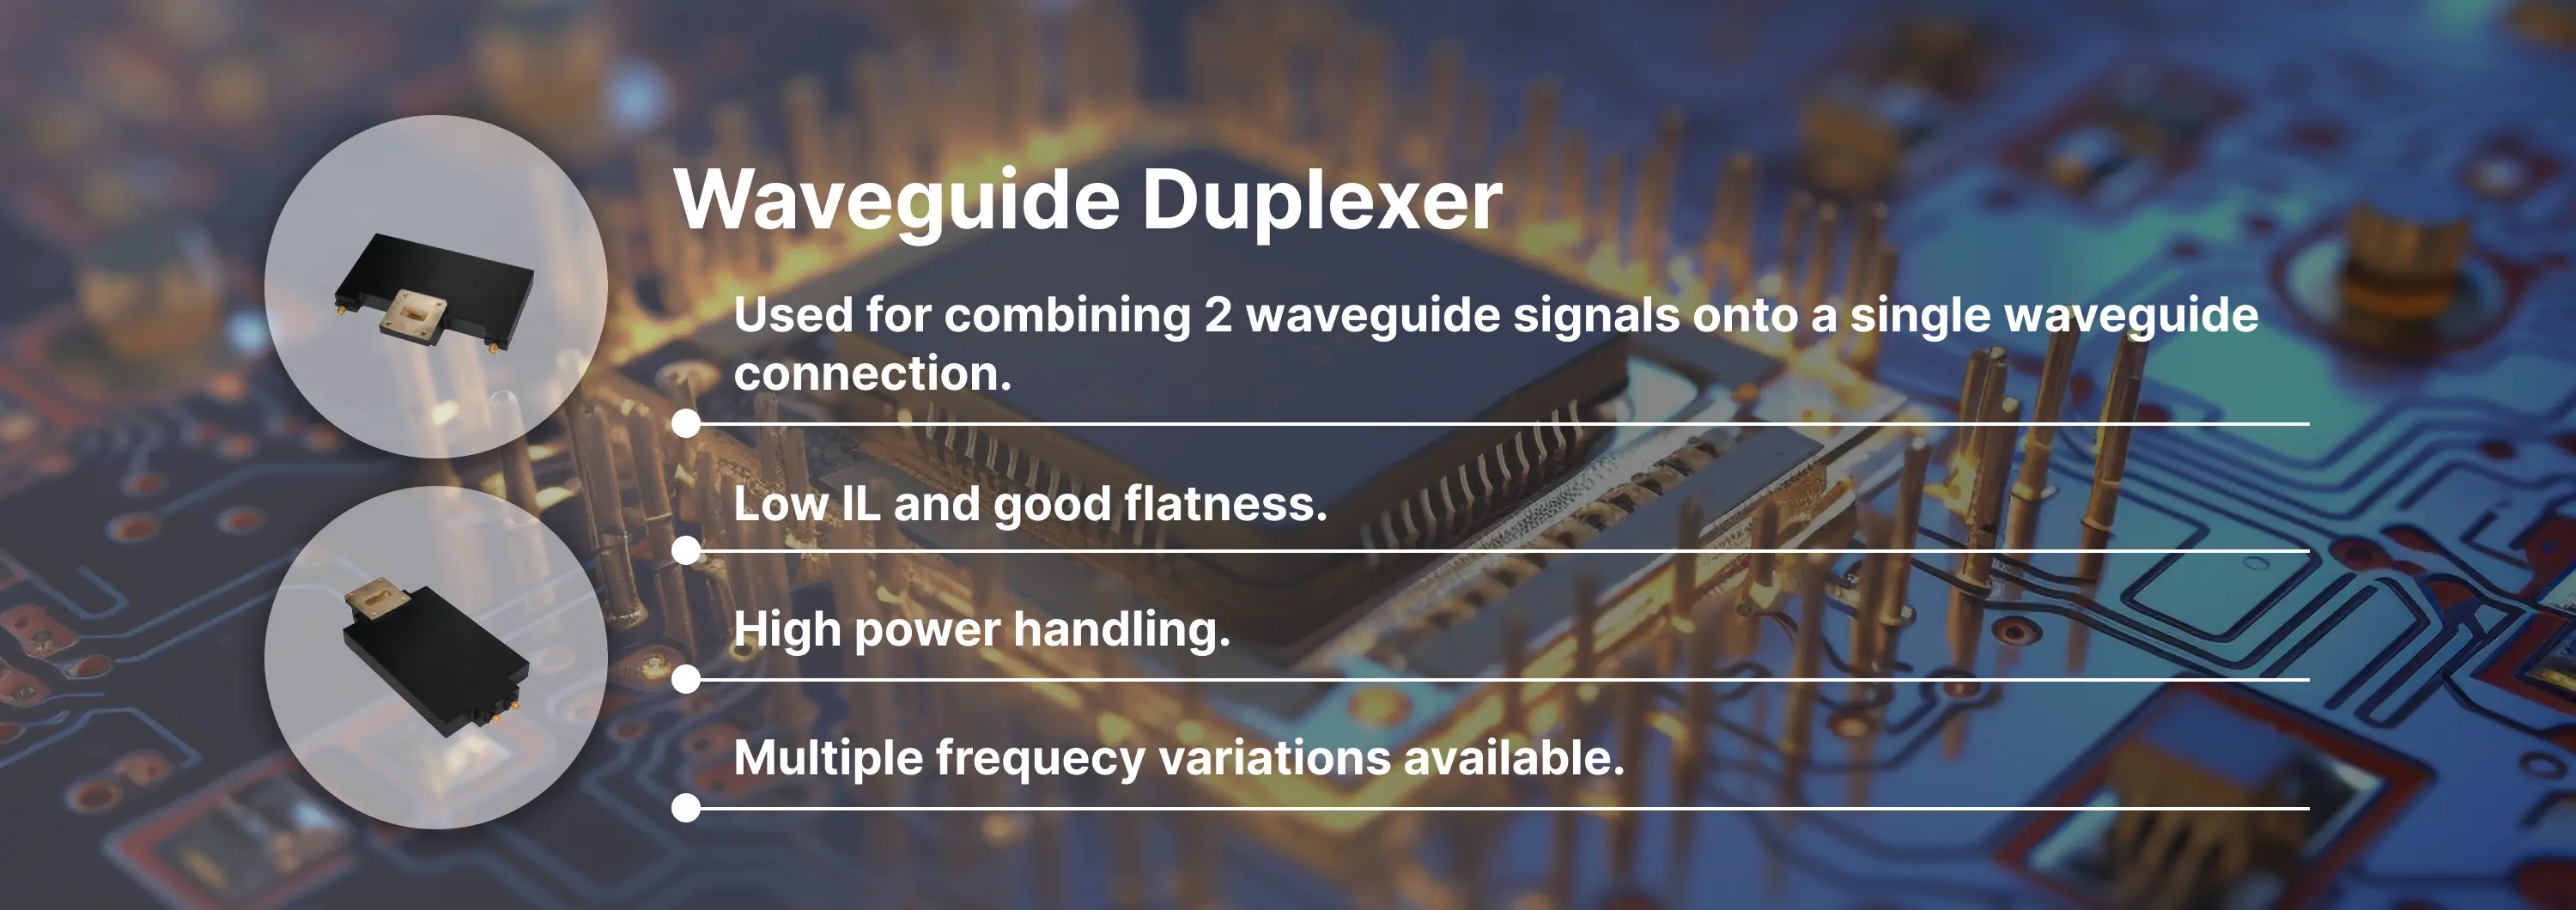 Waveguide Duplexer Banner